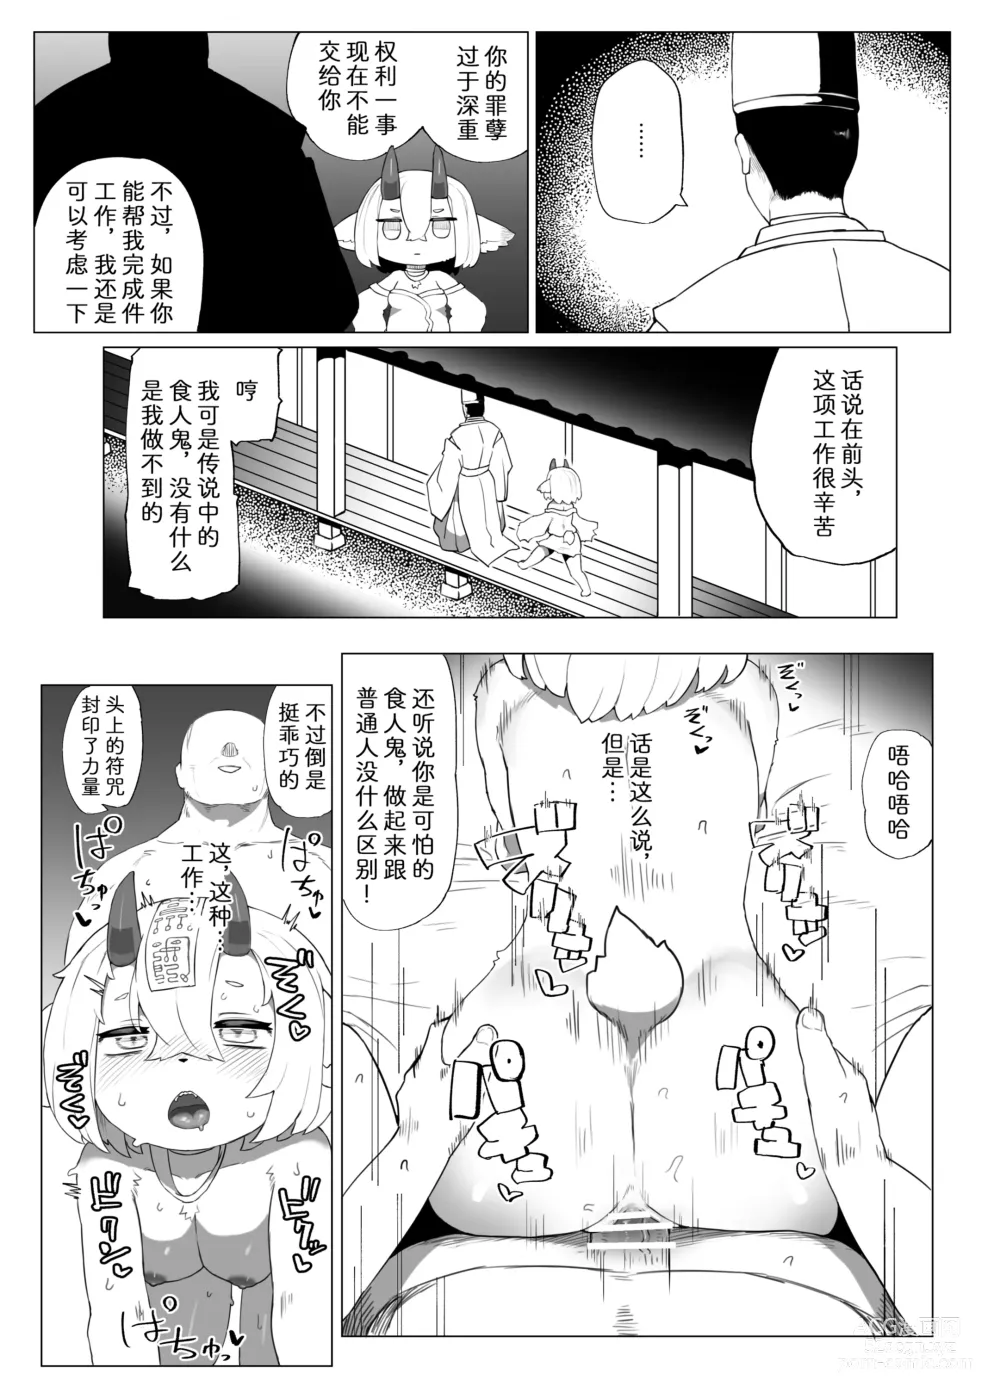 Page 5 of doujinshi 吃什么就要生什么!食人鬼可畏酱